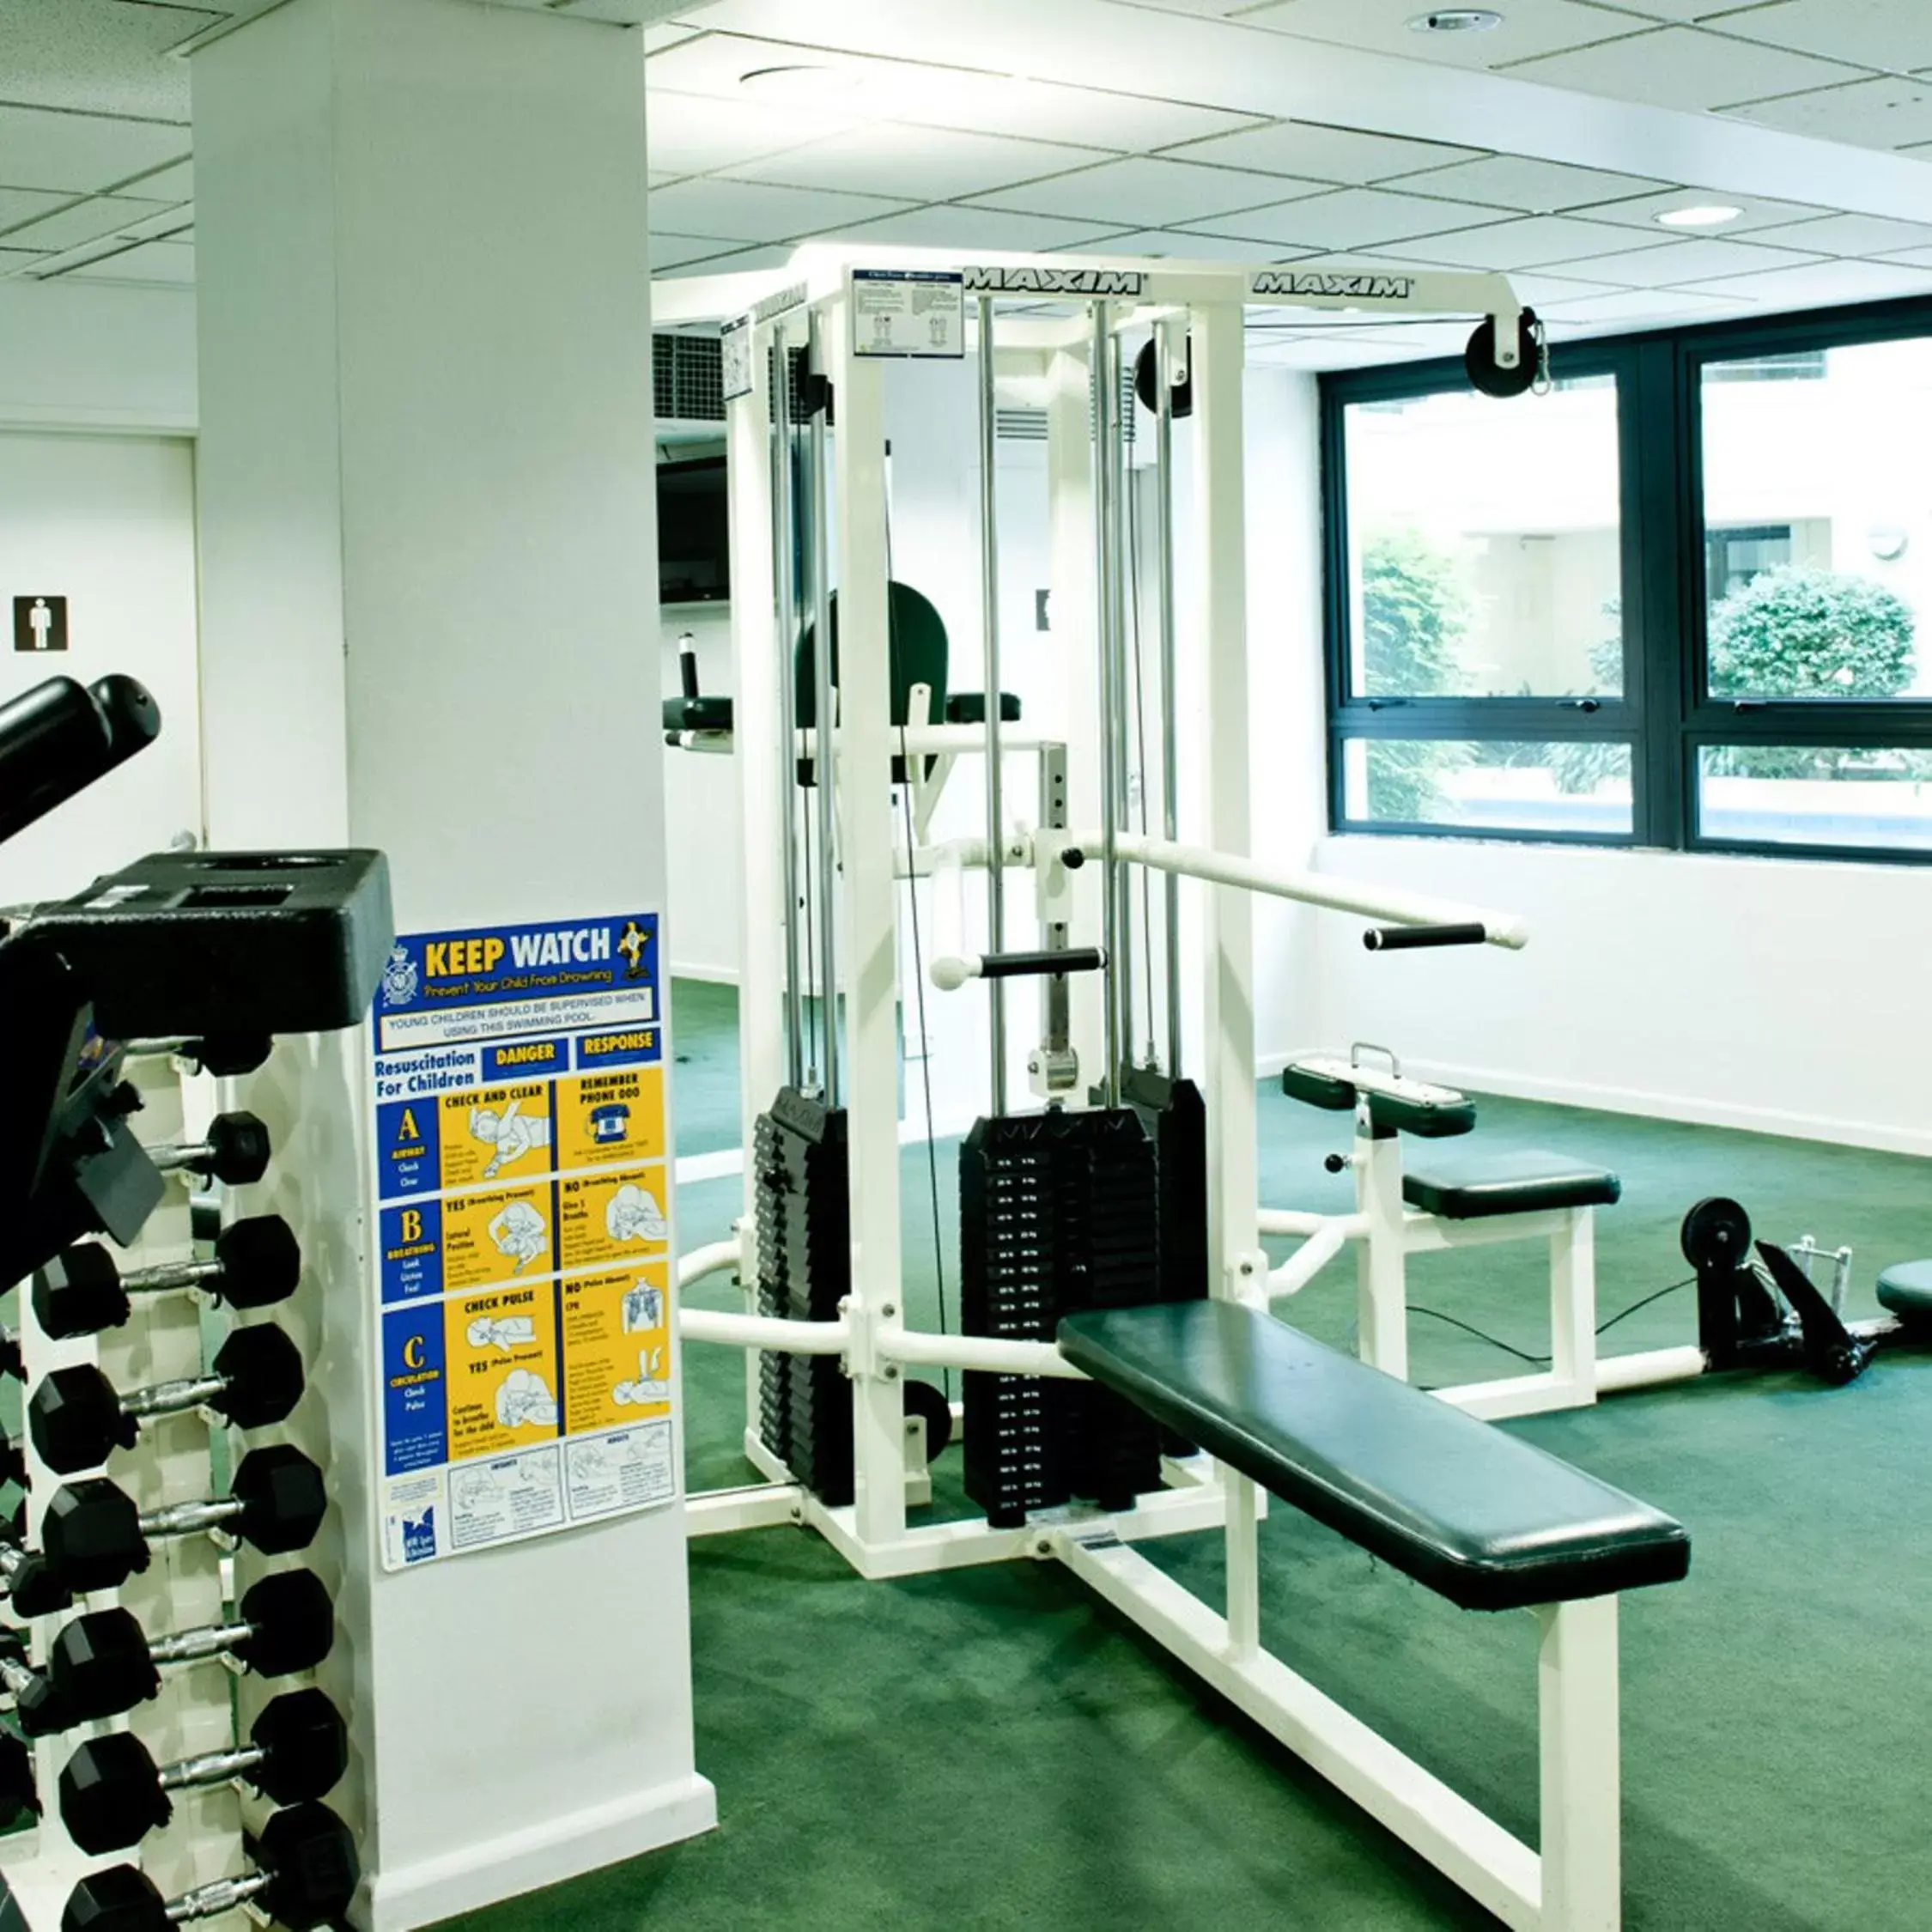 Fitness centre/facilities, Fitness Center/Facilities in Mantra Parramatta